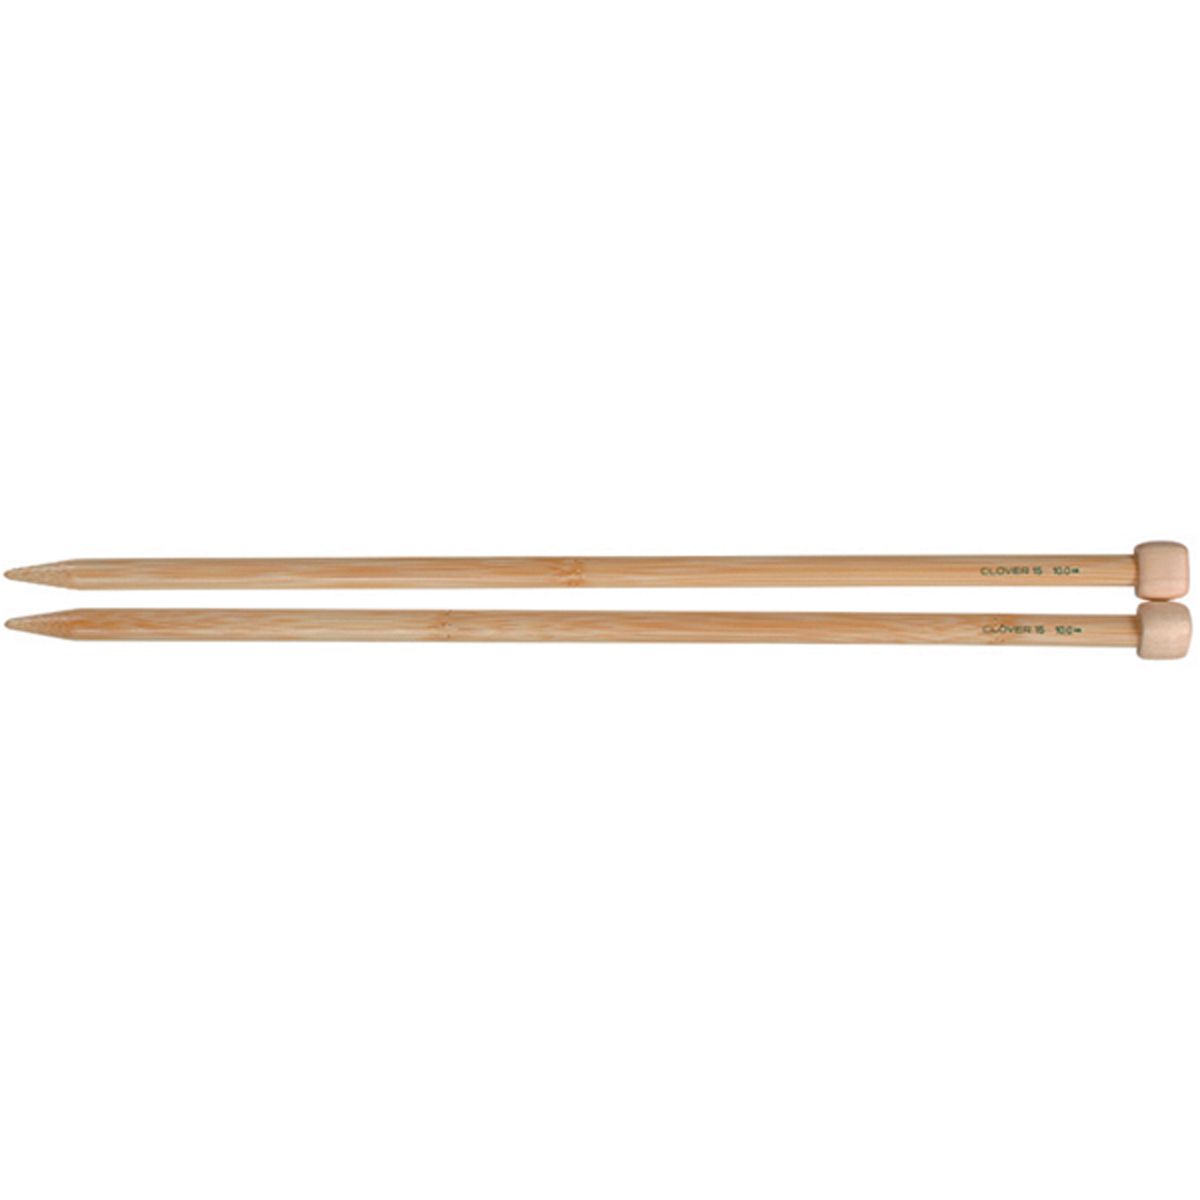 Clover Bamboo Single Point Knitting Needles 13" 14" Size 4